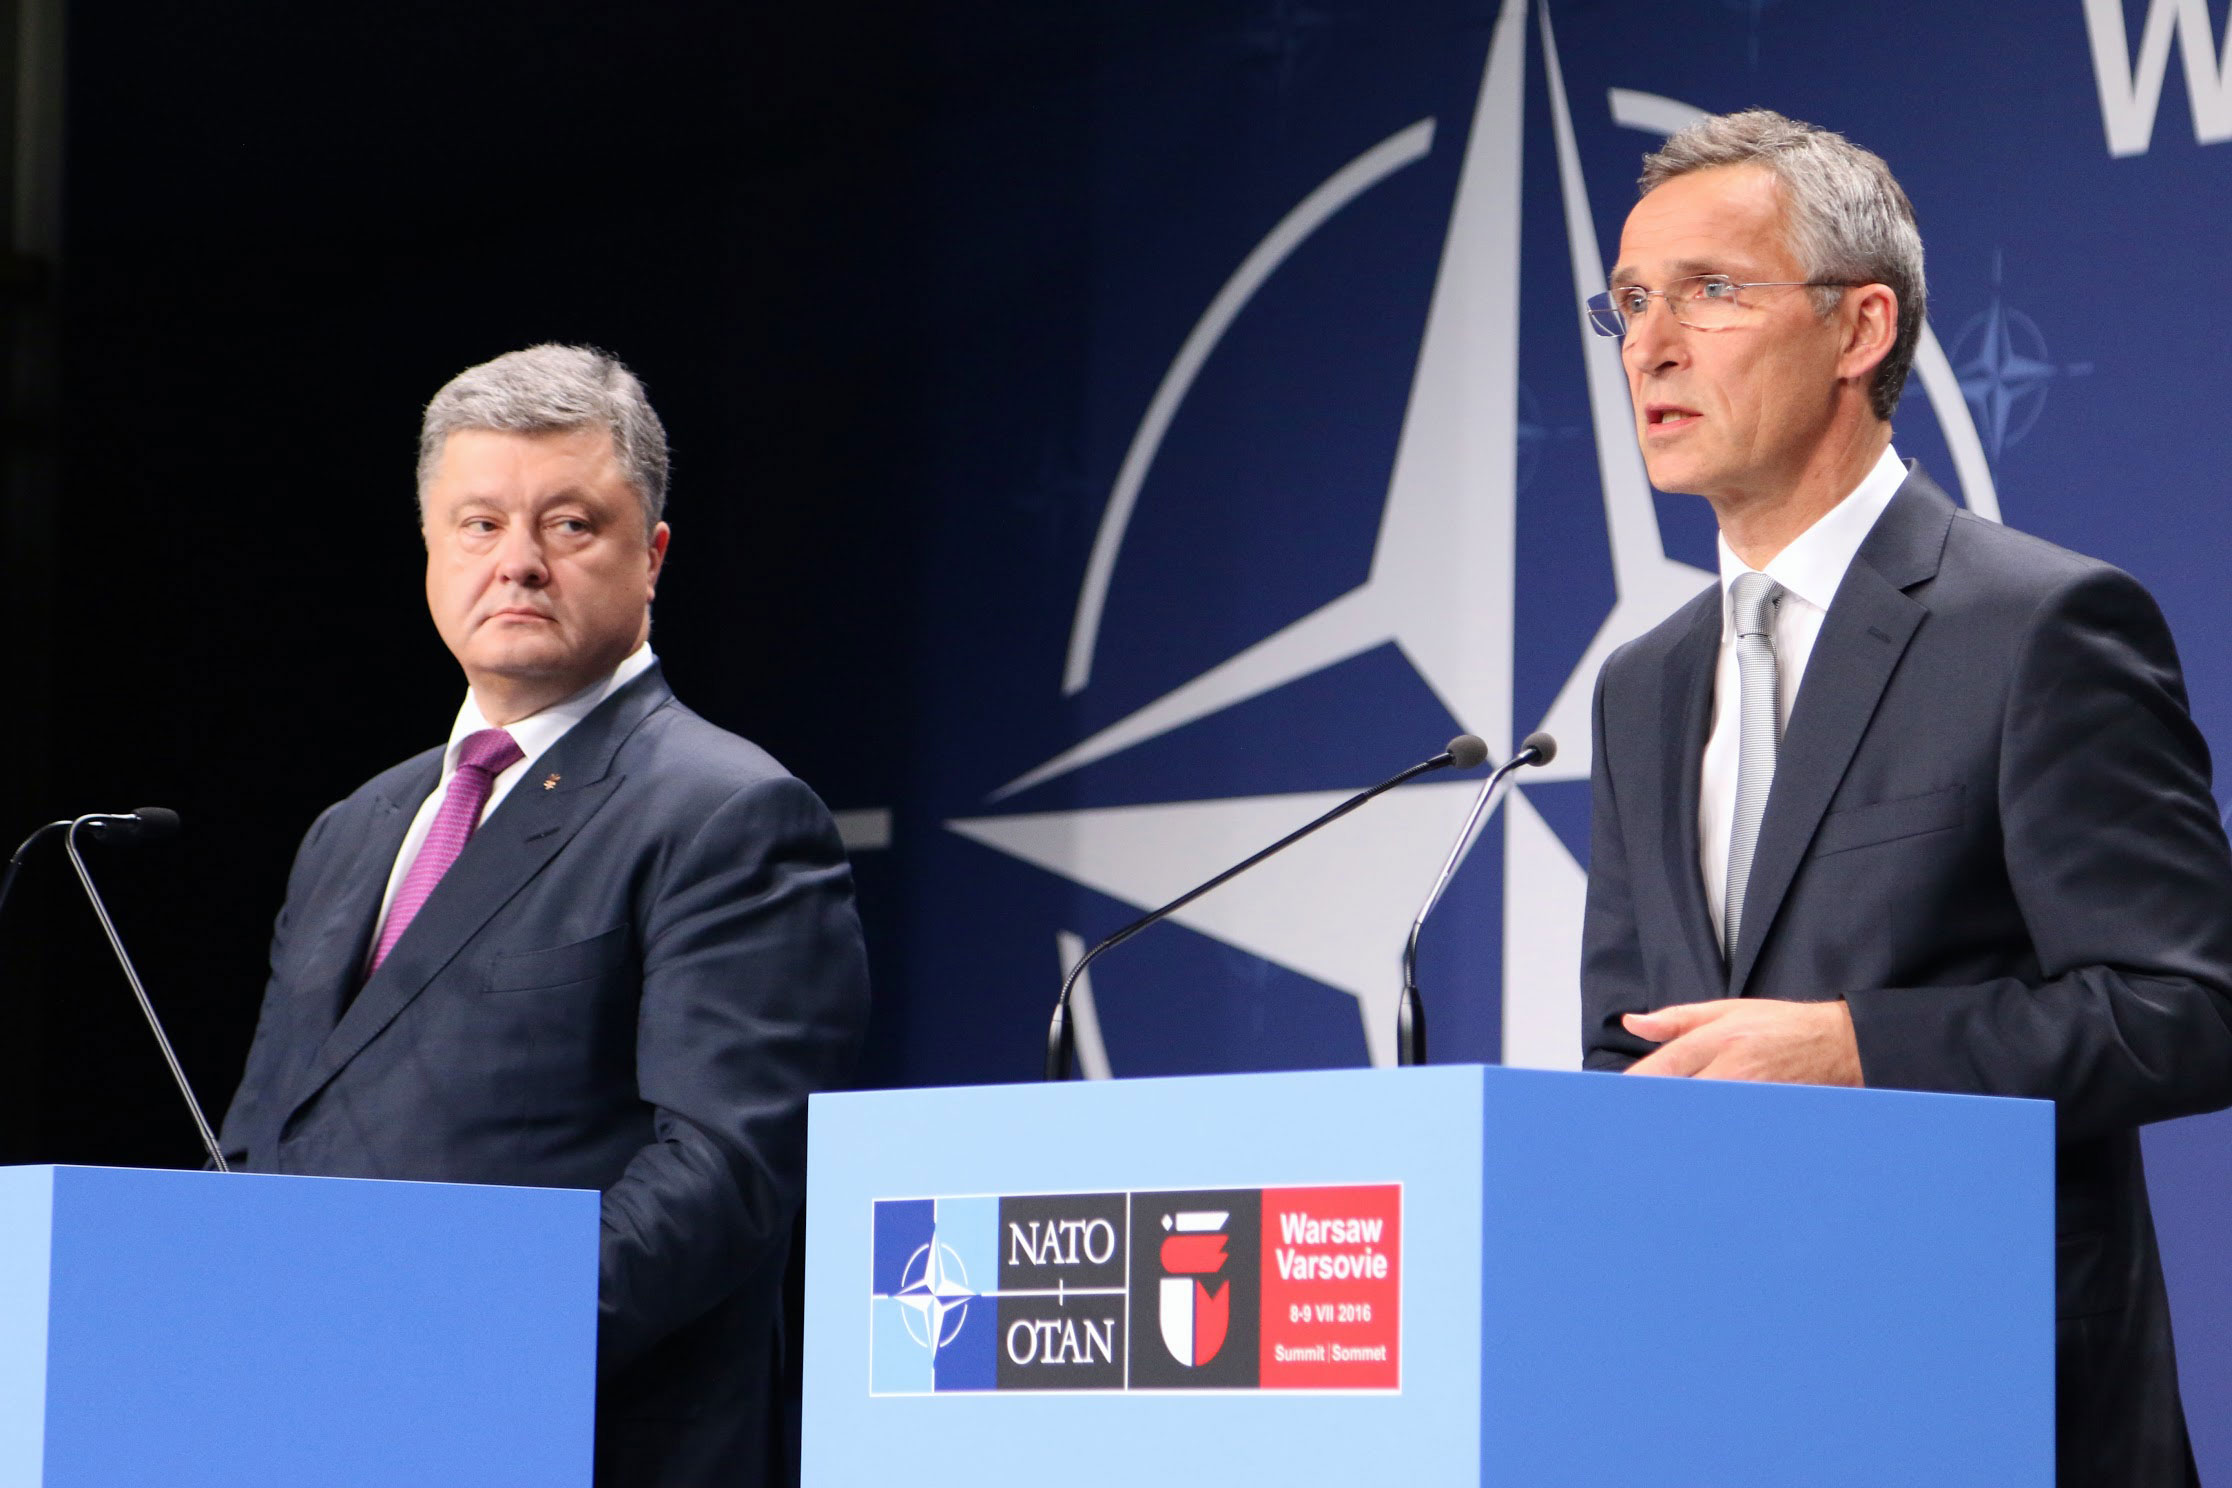 Ukrainian President Petro Poroshenko (left) speaks alongside NATO Secretary General Jens Stoltenberg at the July 2016 NATO summit in Warsaw, Poland. (Photos: Nolan Peterson/The Daily Signal)